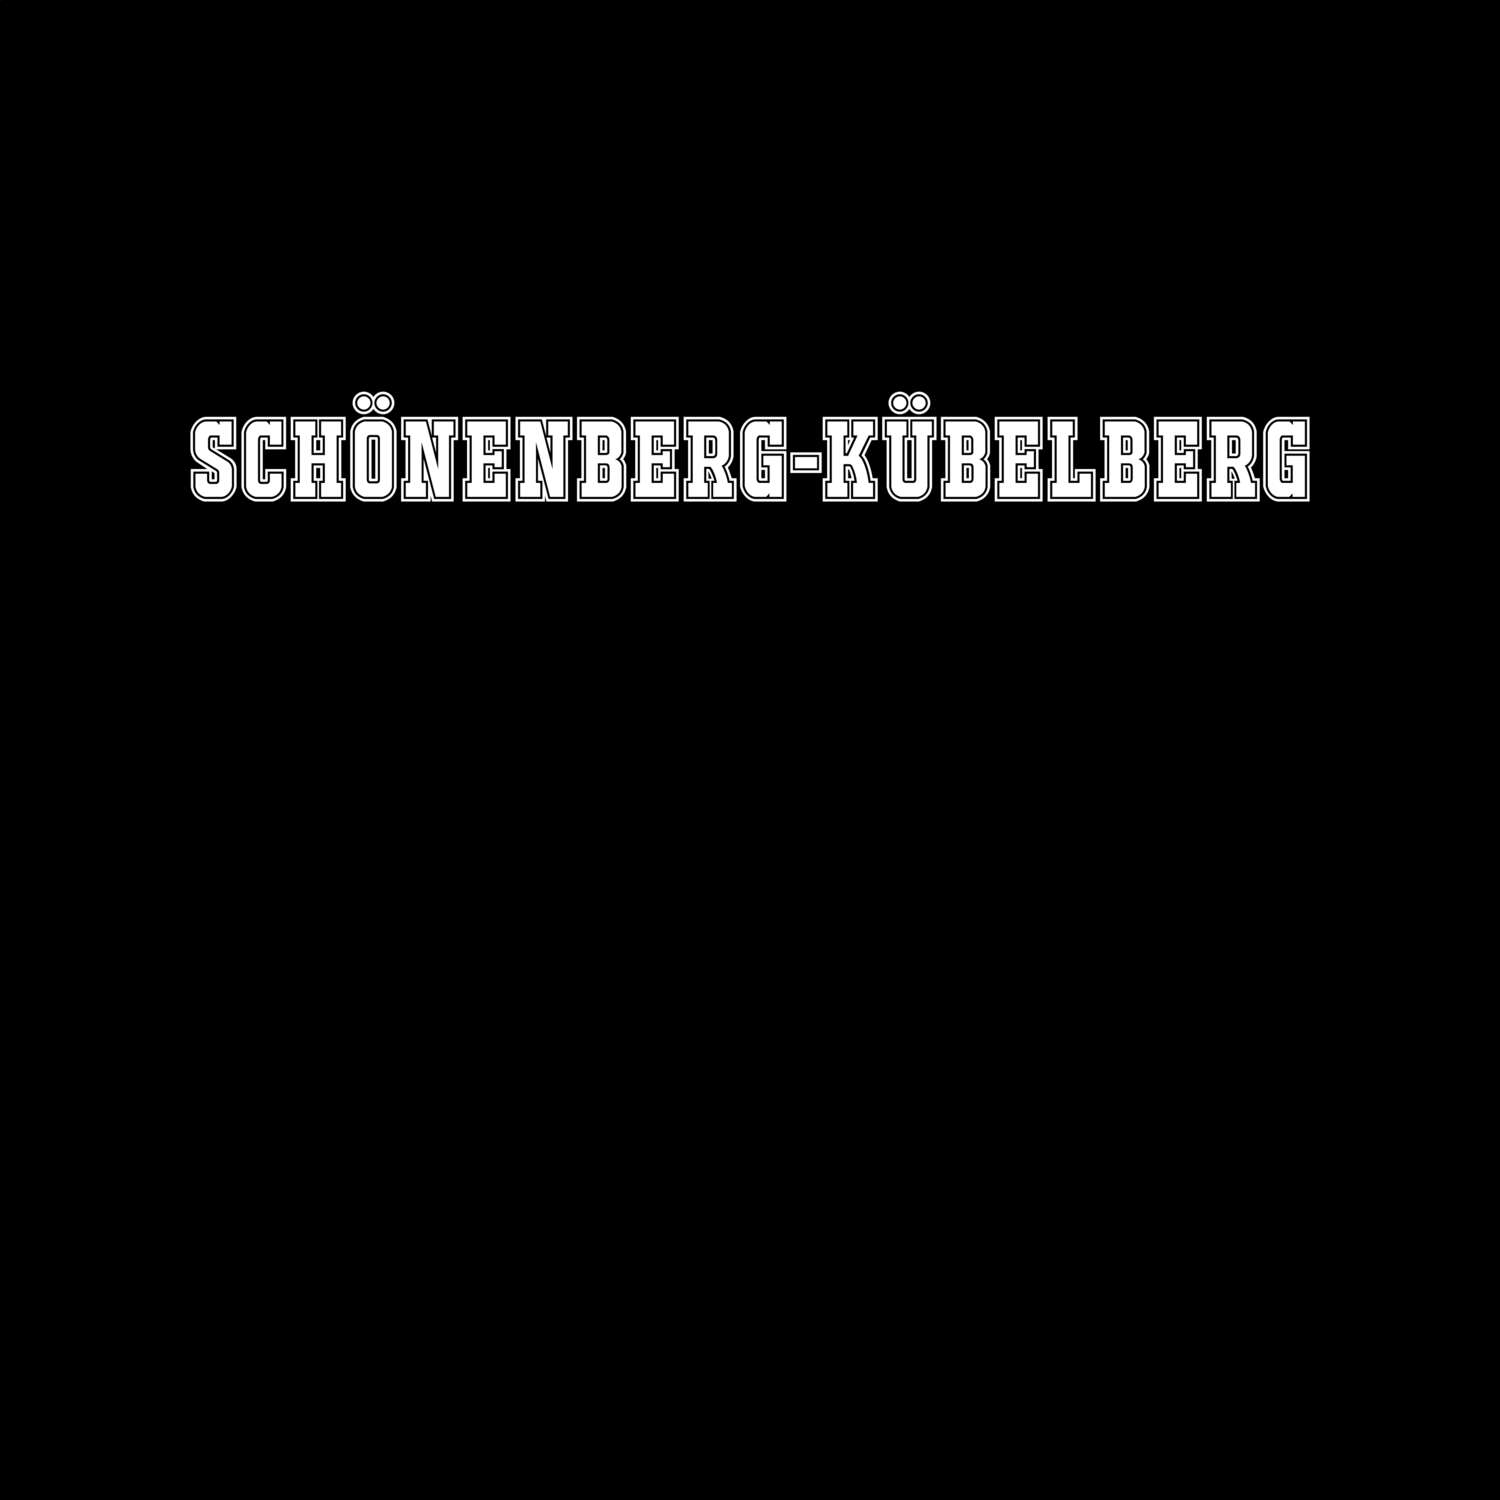 Schönenberg-Kübelberg T-Shirt »Classic«